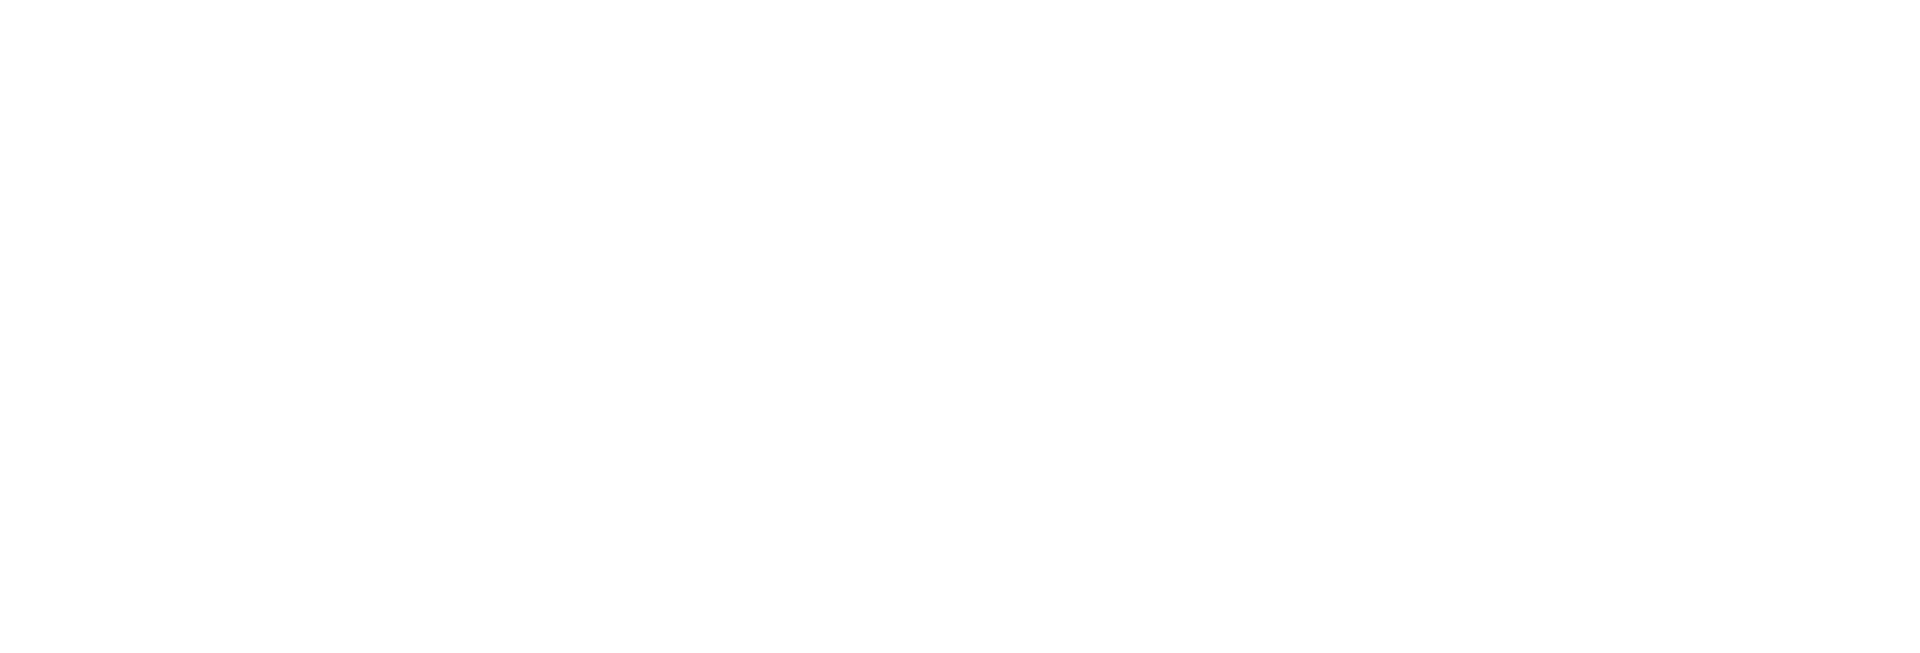 arflex-logo